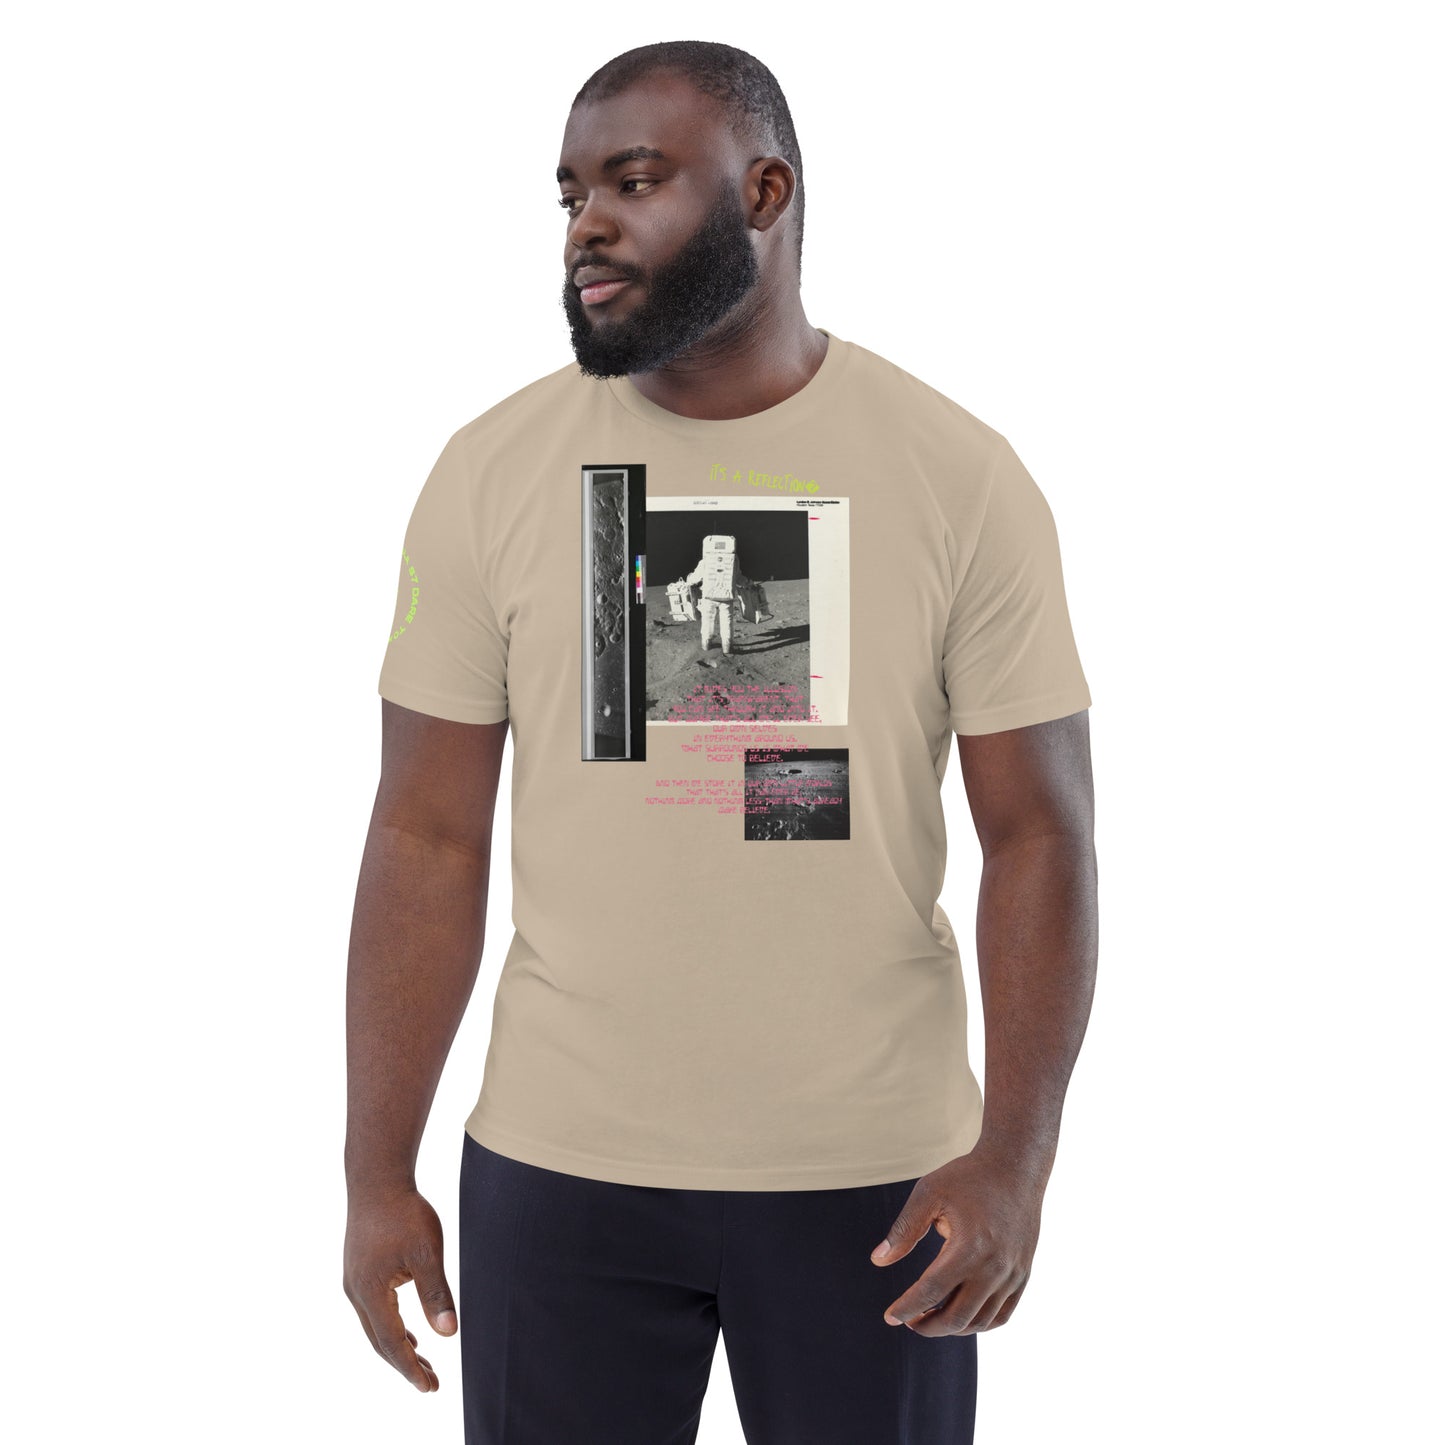 Reflection of Self, Man on the Moon Unisex Organic Cotton T-Shirt